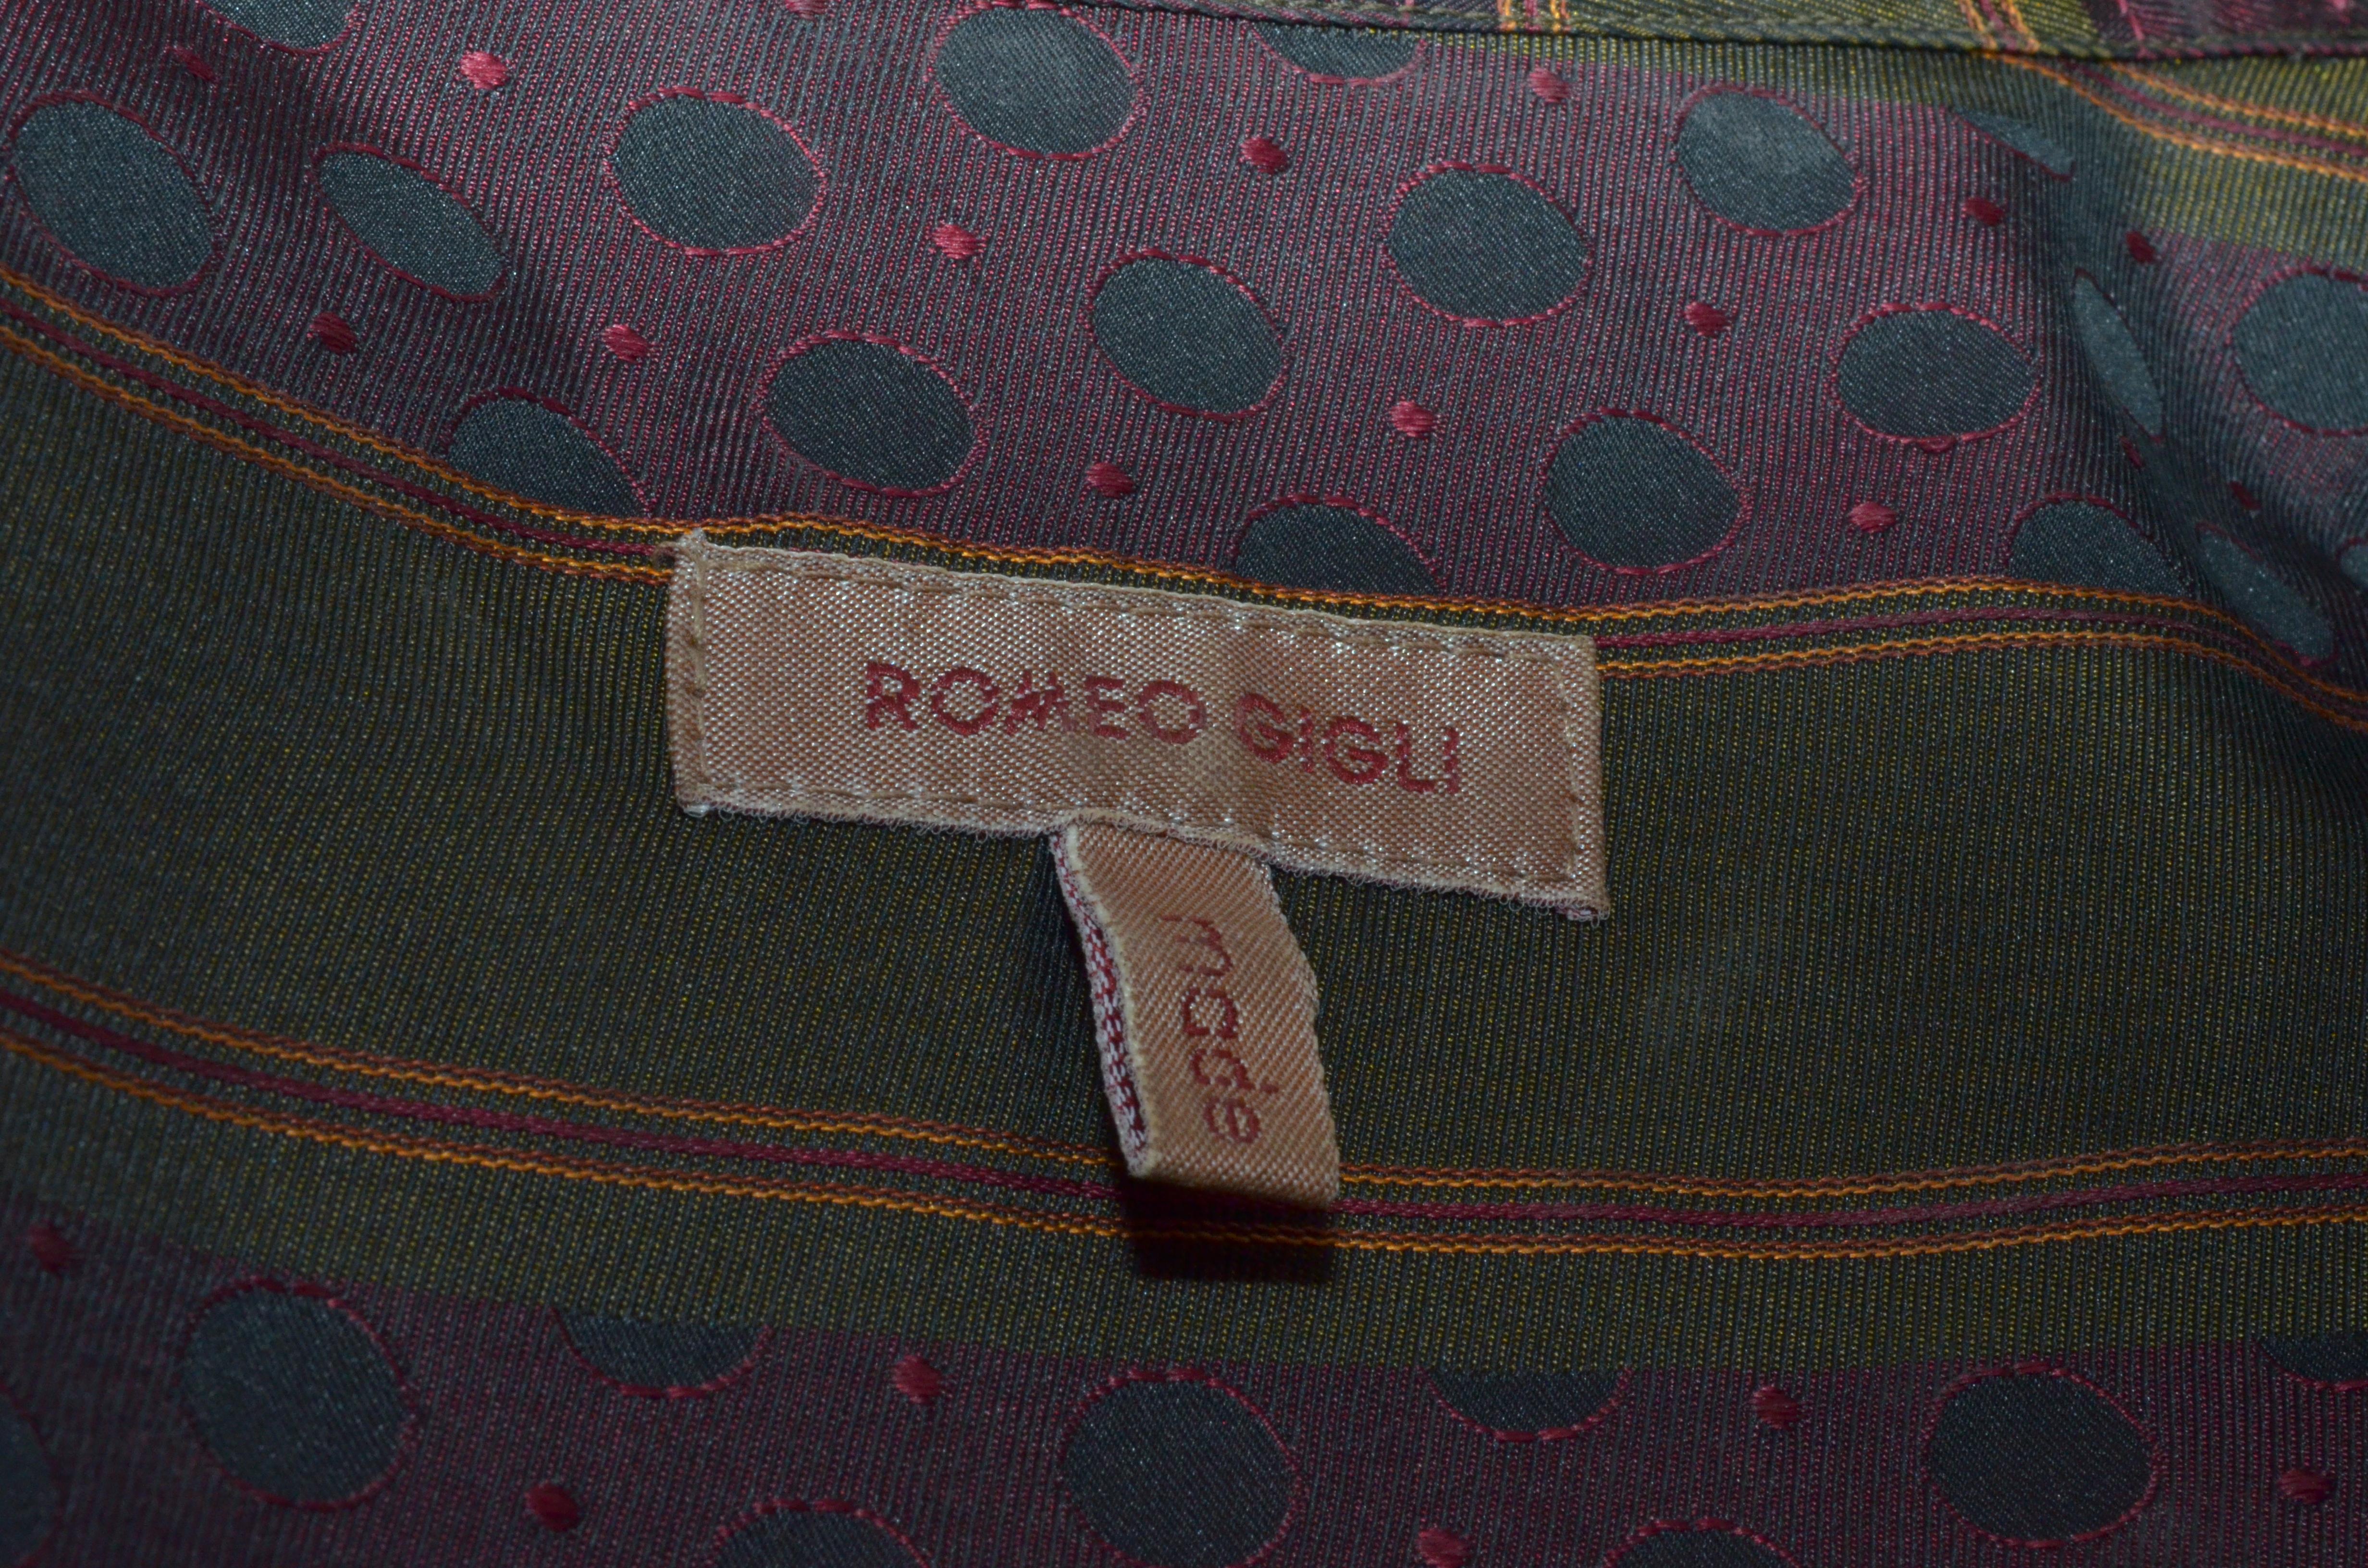 Romeo Gigli Green Sleepwear Pants Suit 3